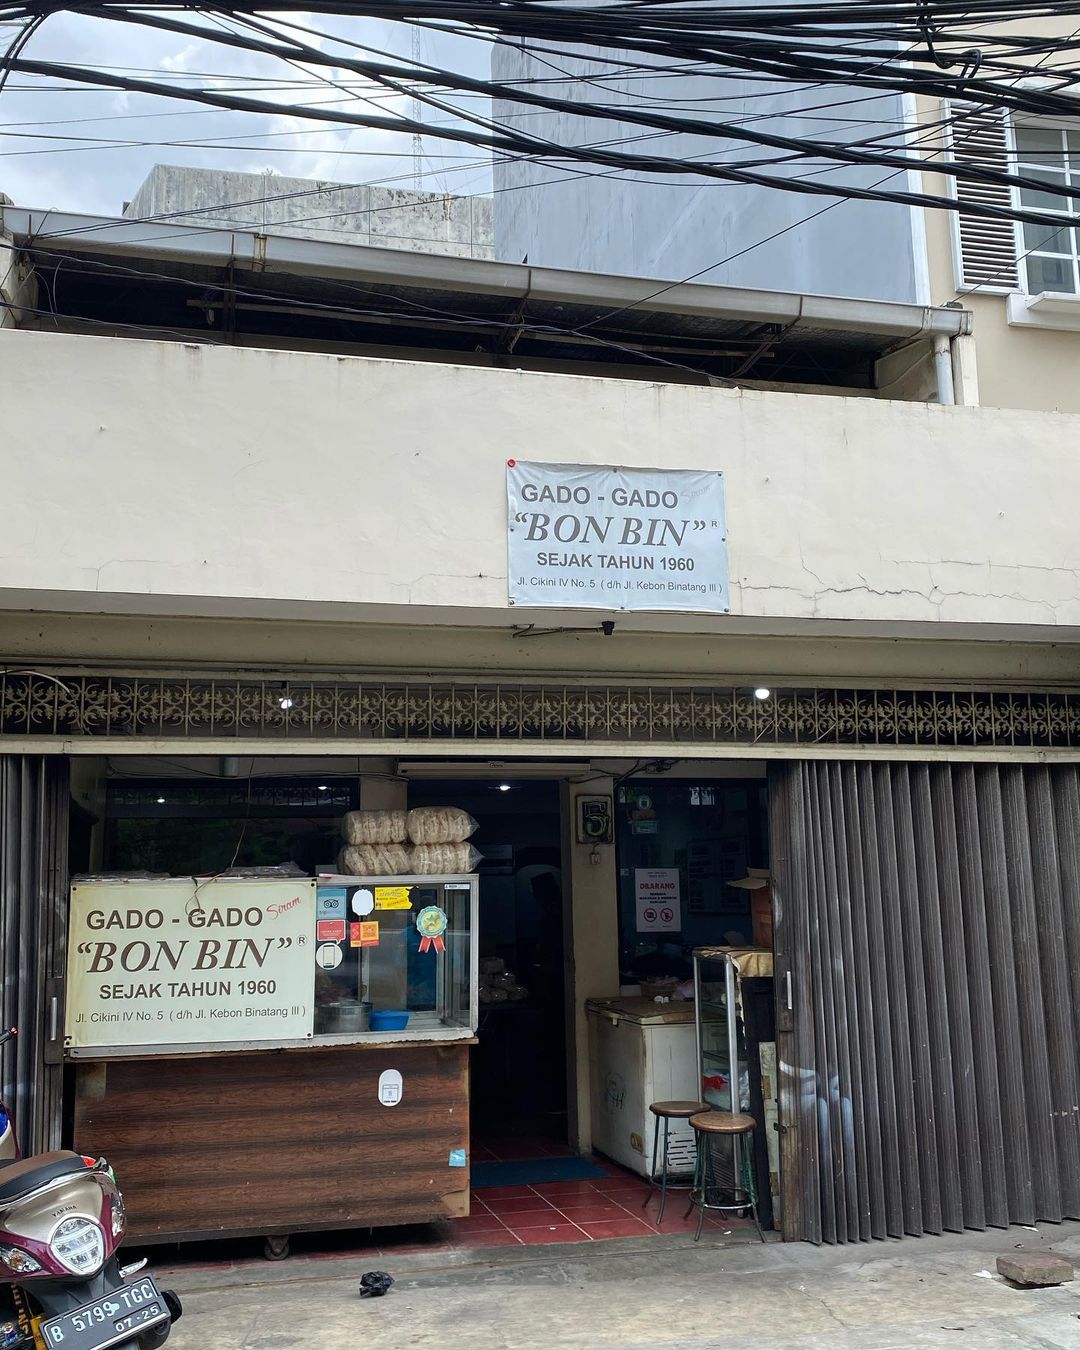 historic restaurants in jakarta - gado gado bon bin